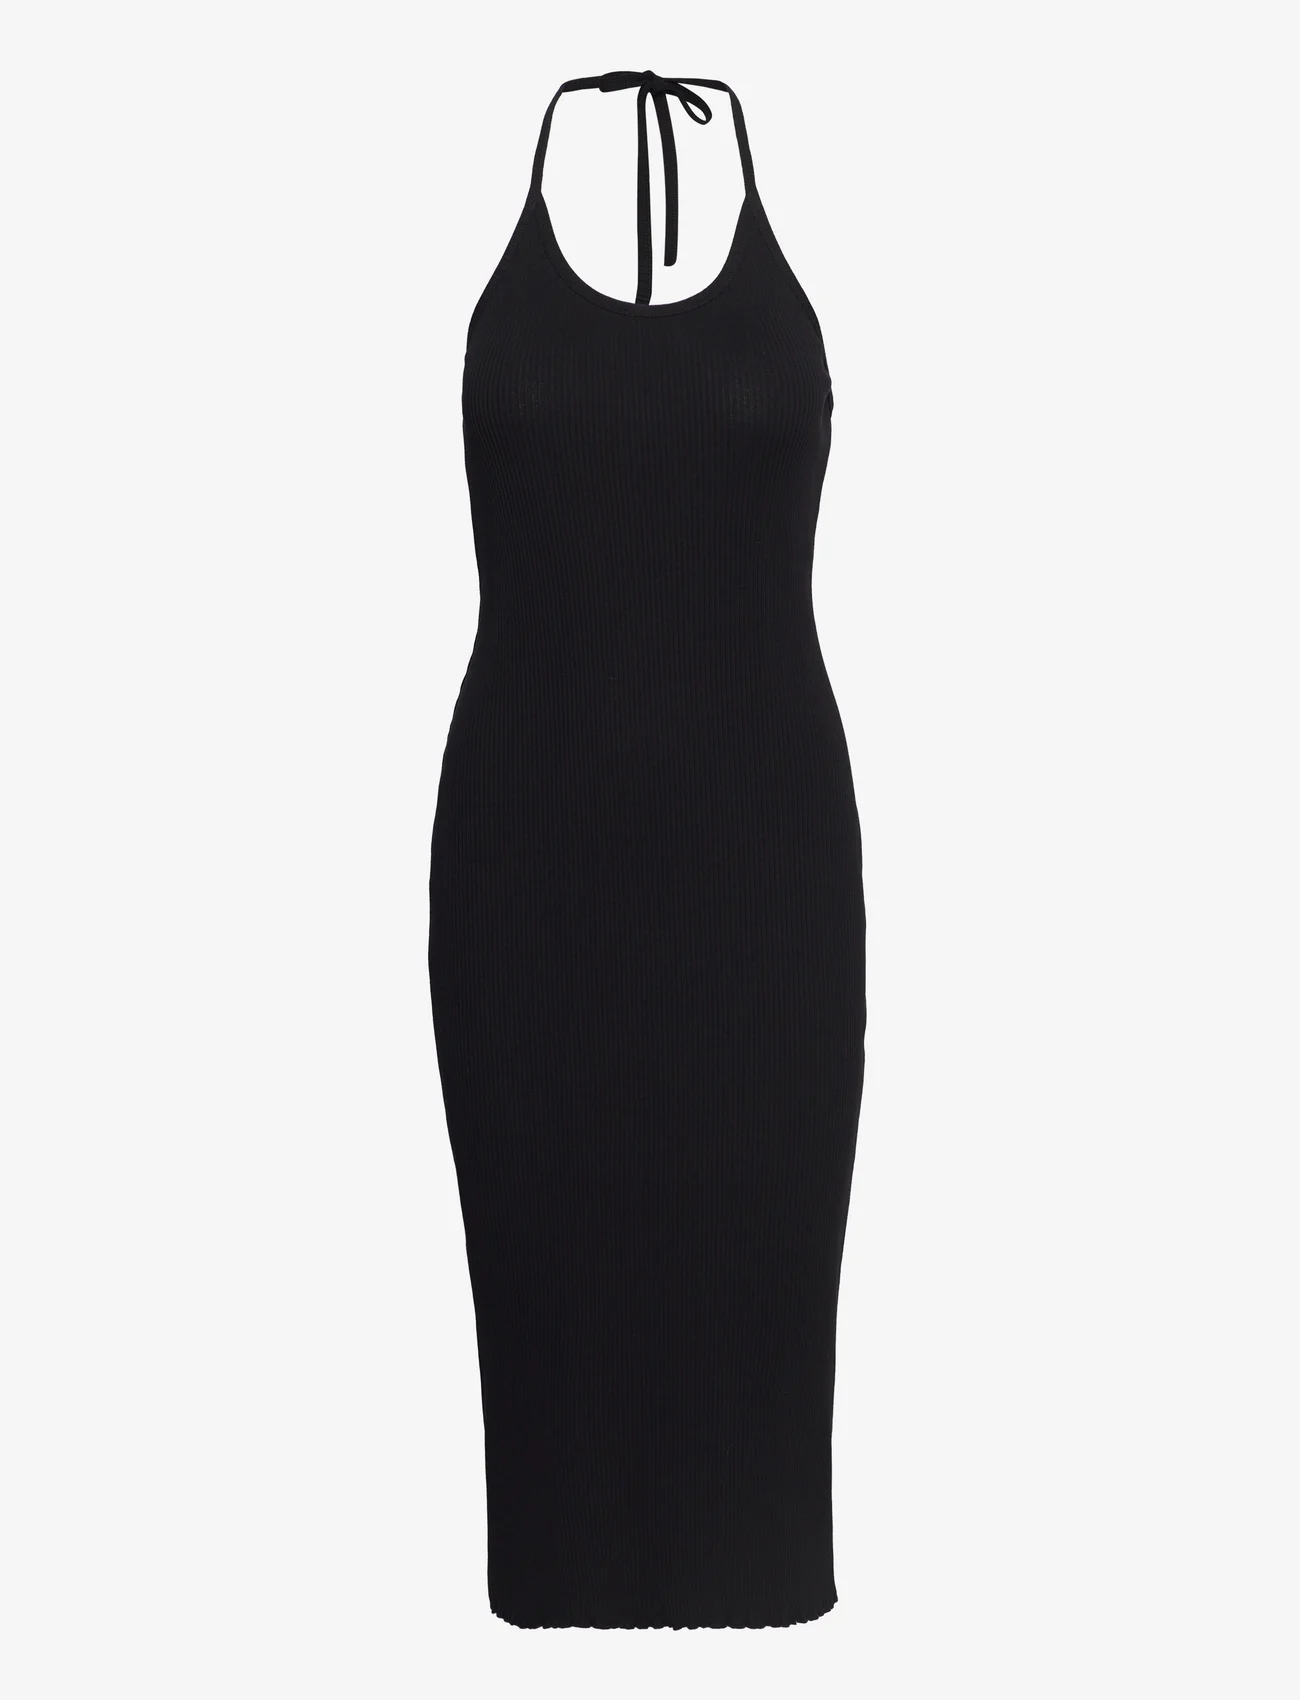 Filippa K - Rib Halter Dress - etuikleider - black - 0